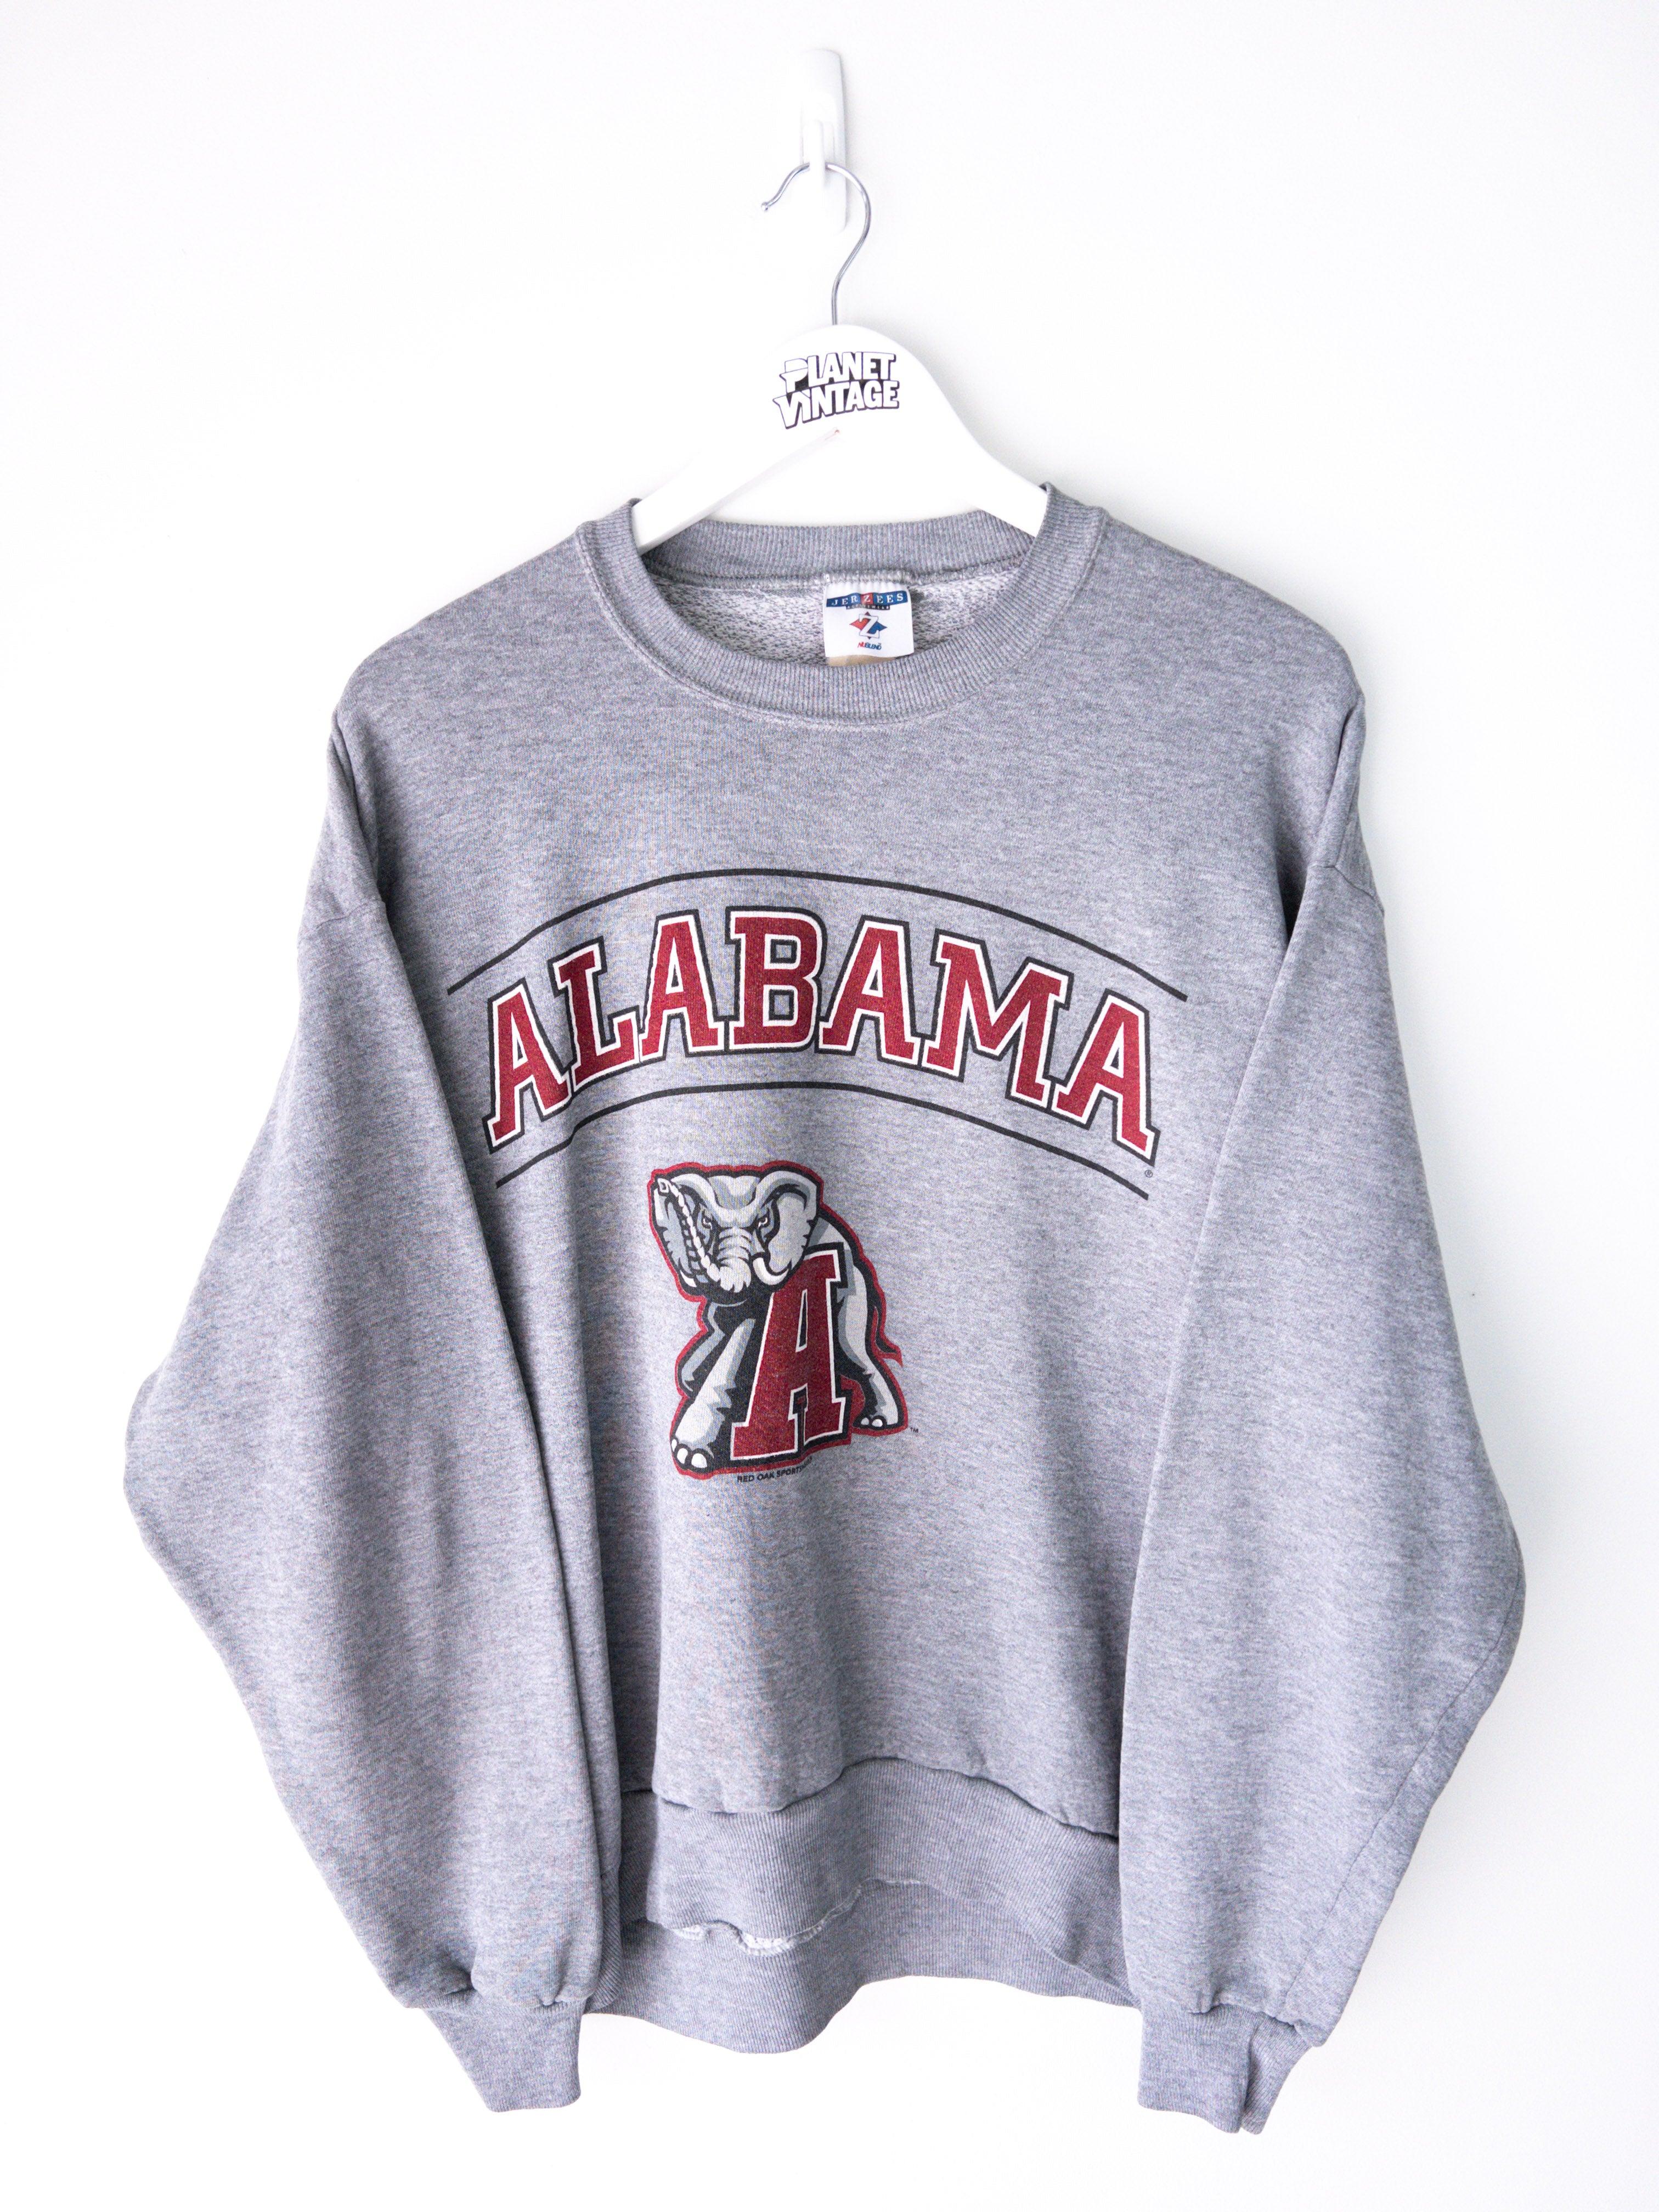 Vintage Alabama Crimson Tide Sweatshirt (M)